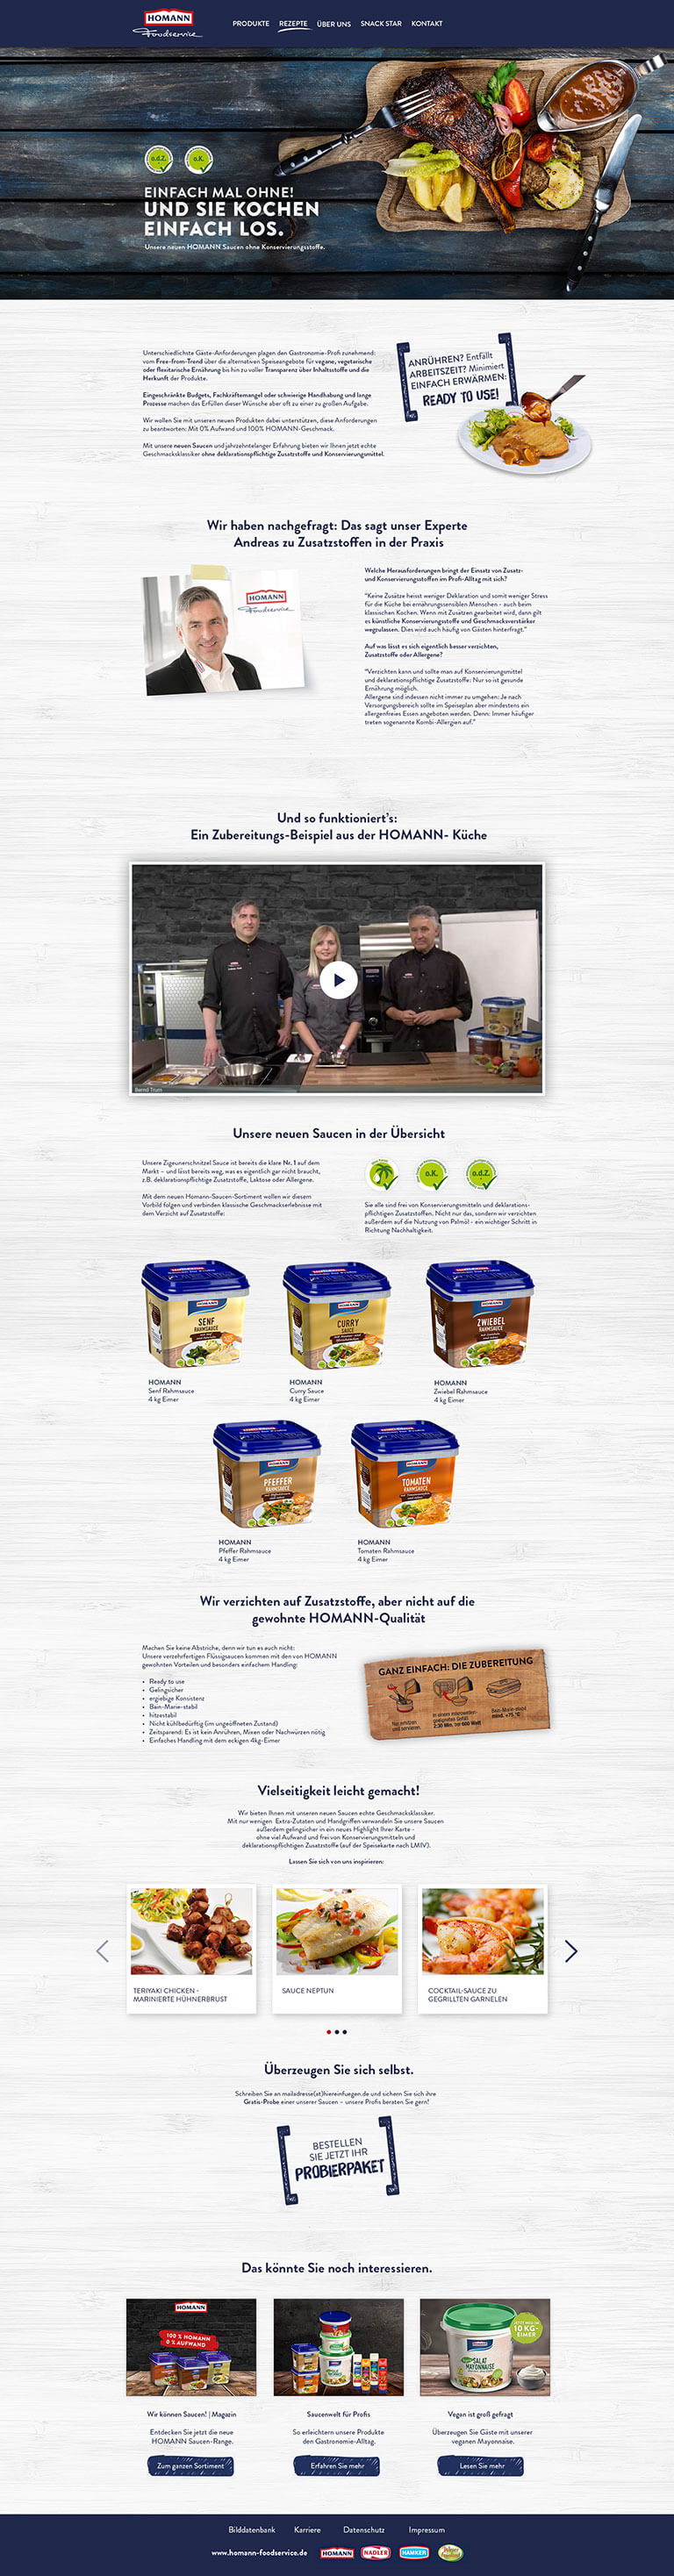 Homann Foodservice campaigns landing page screenshot